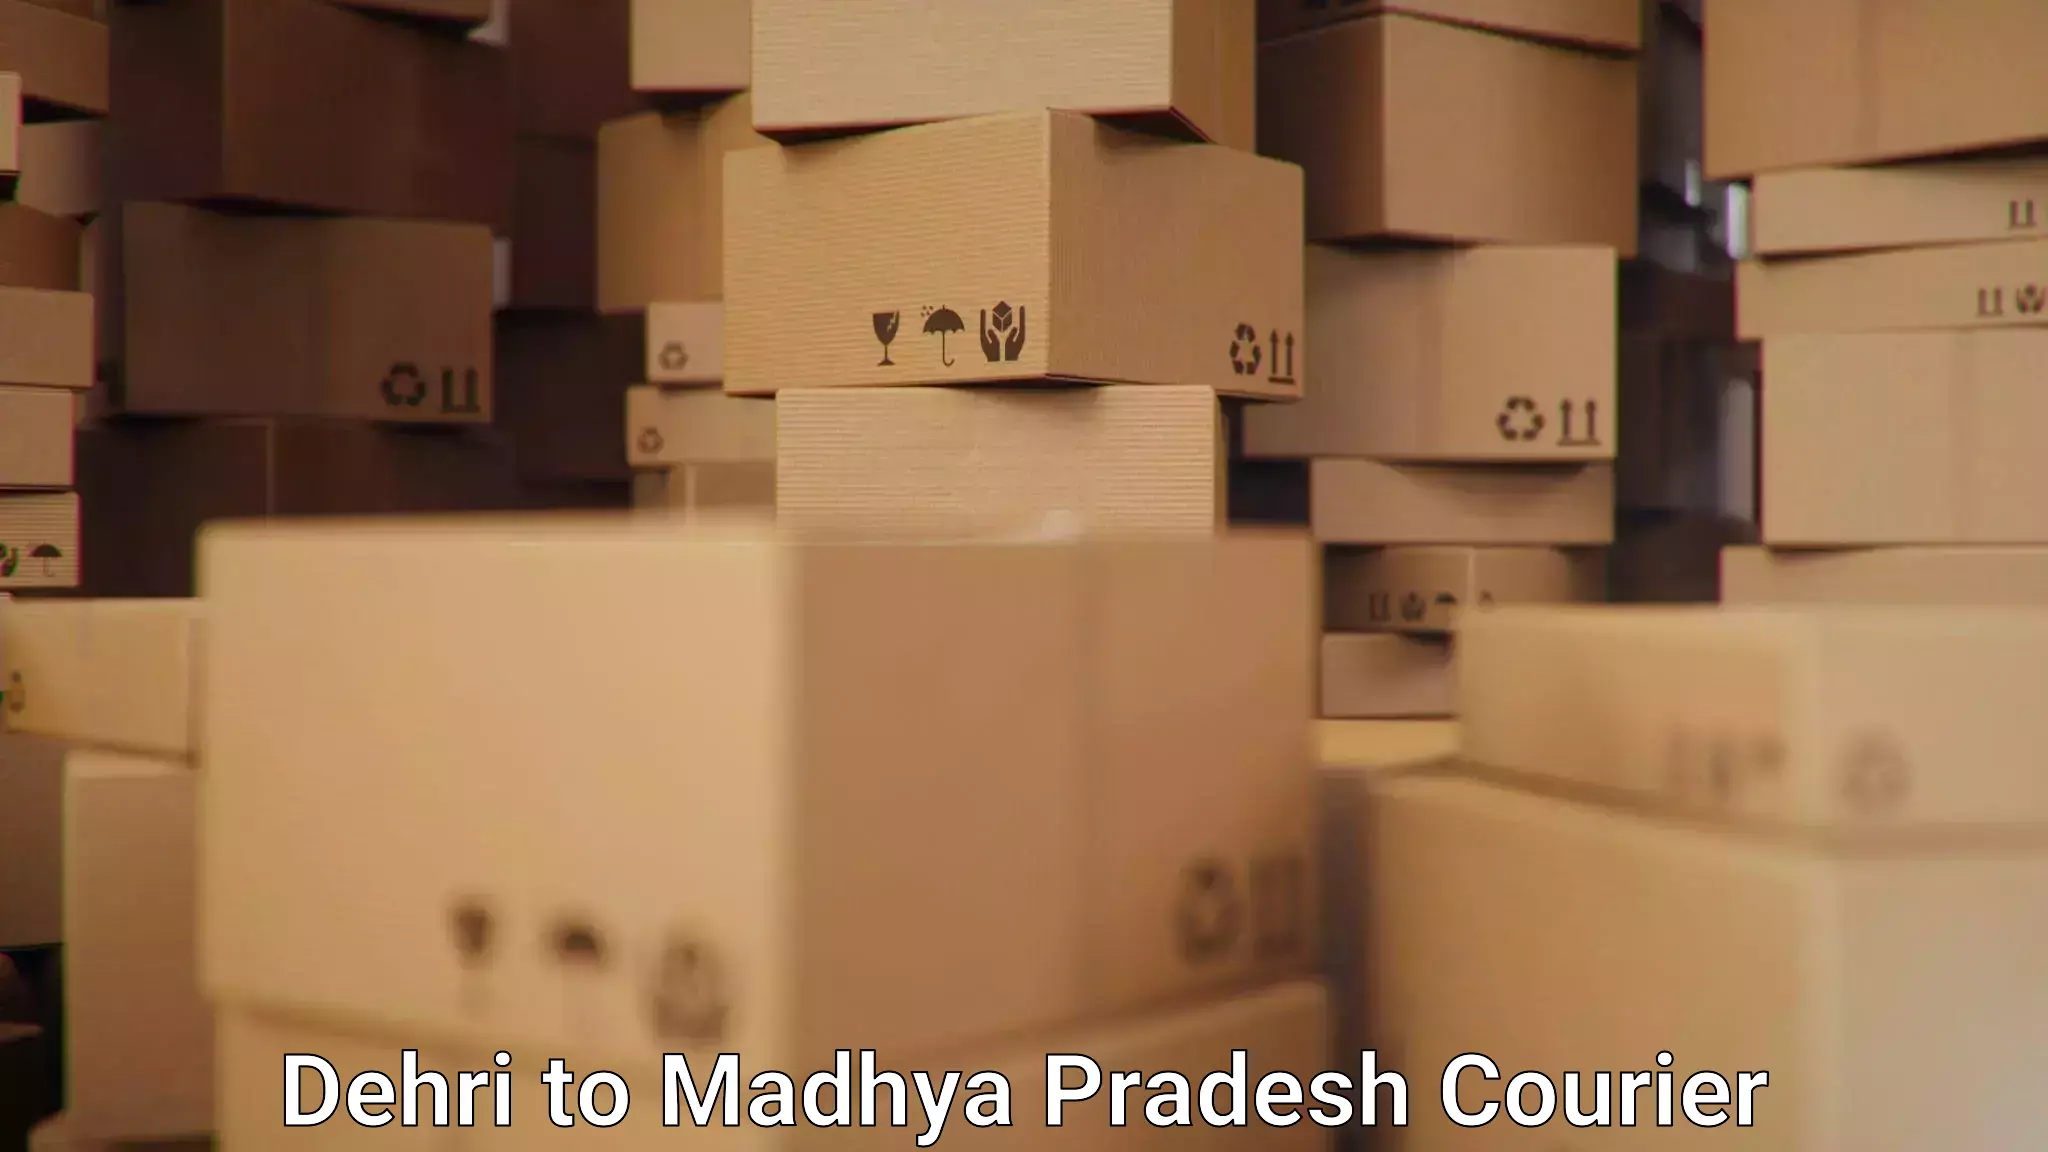 Courier service partnerships Dehri to Shajapur